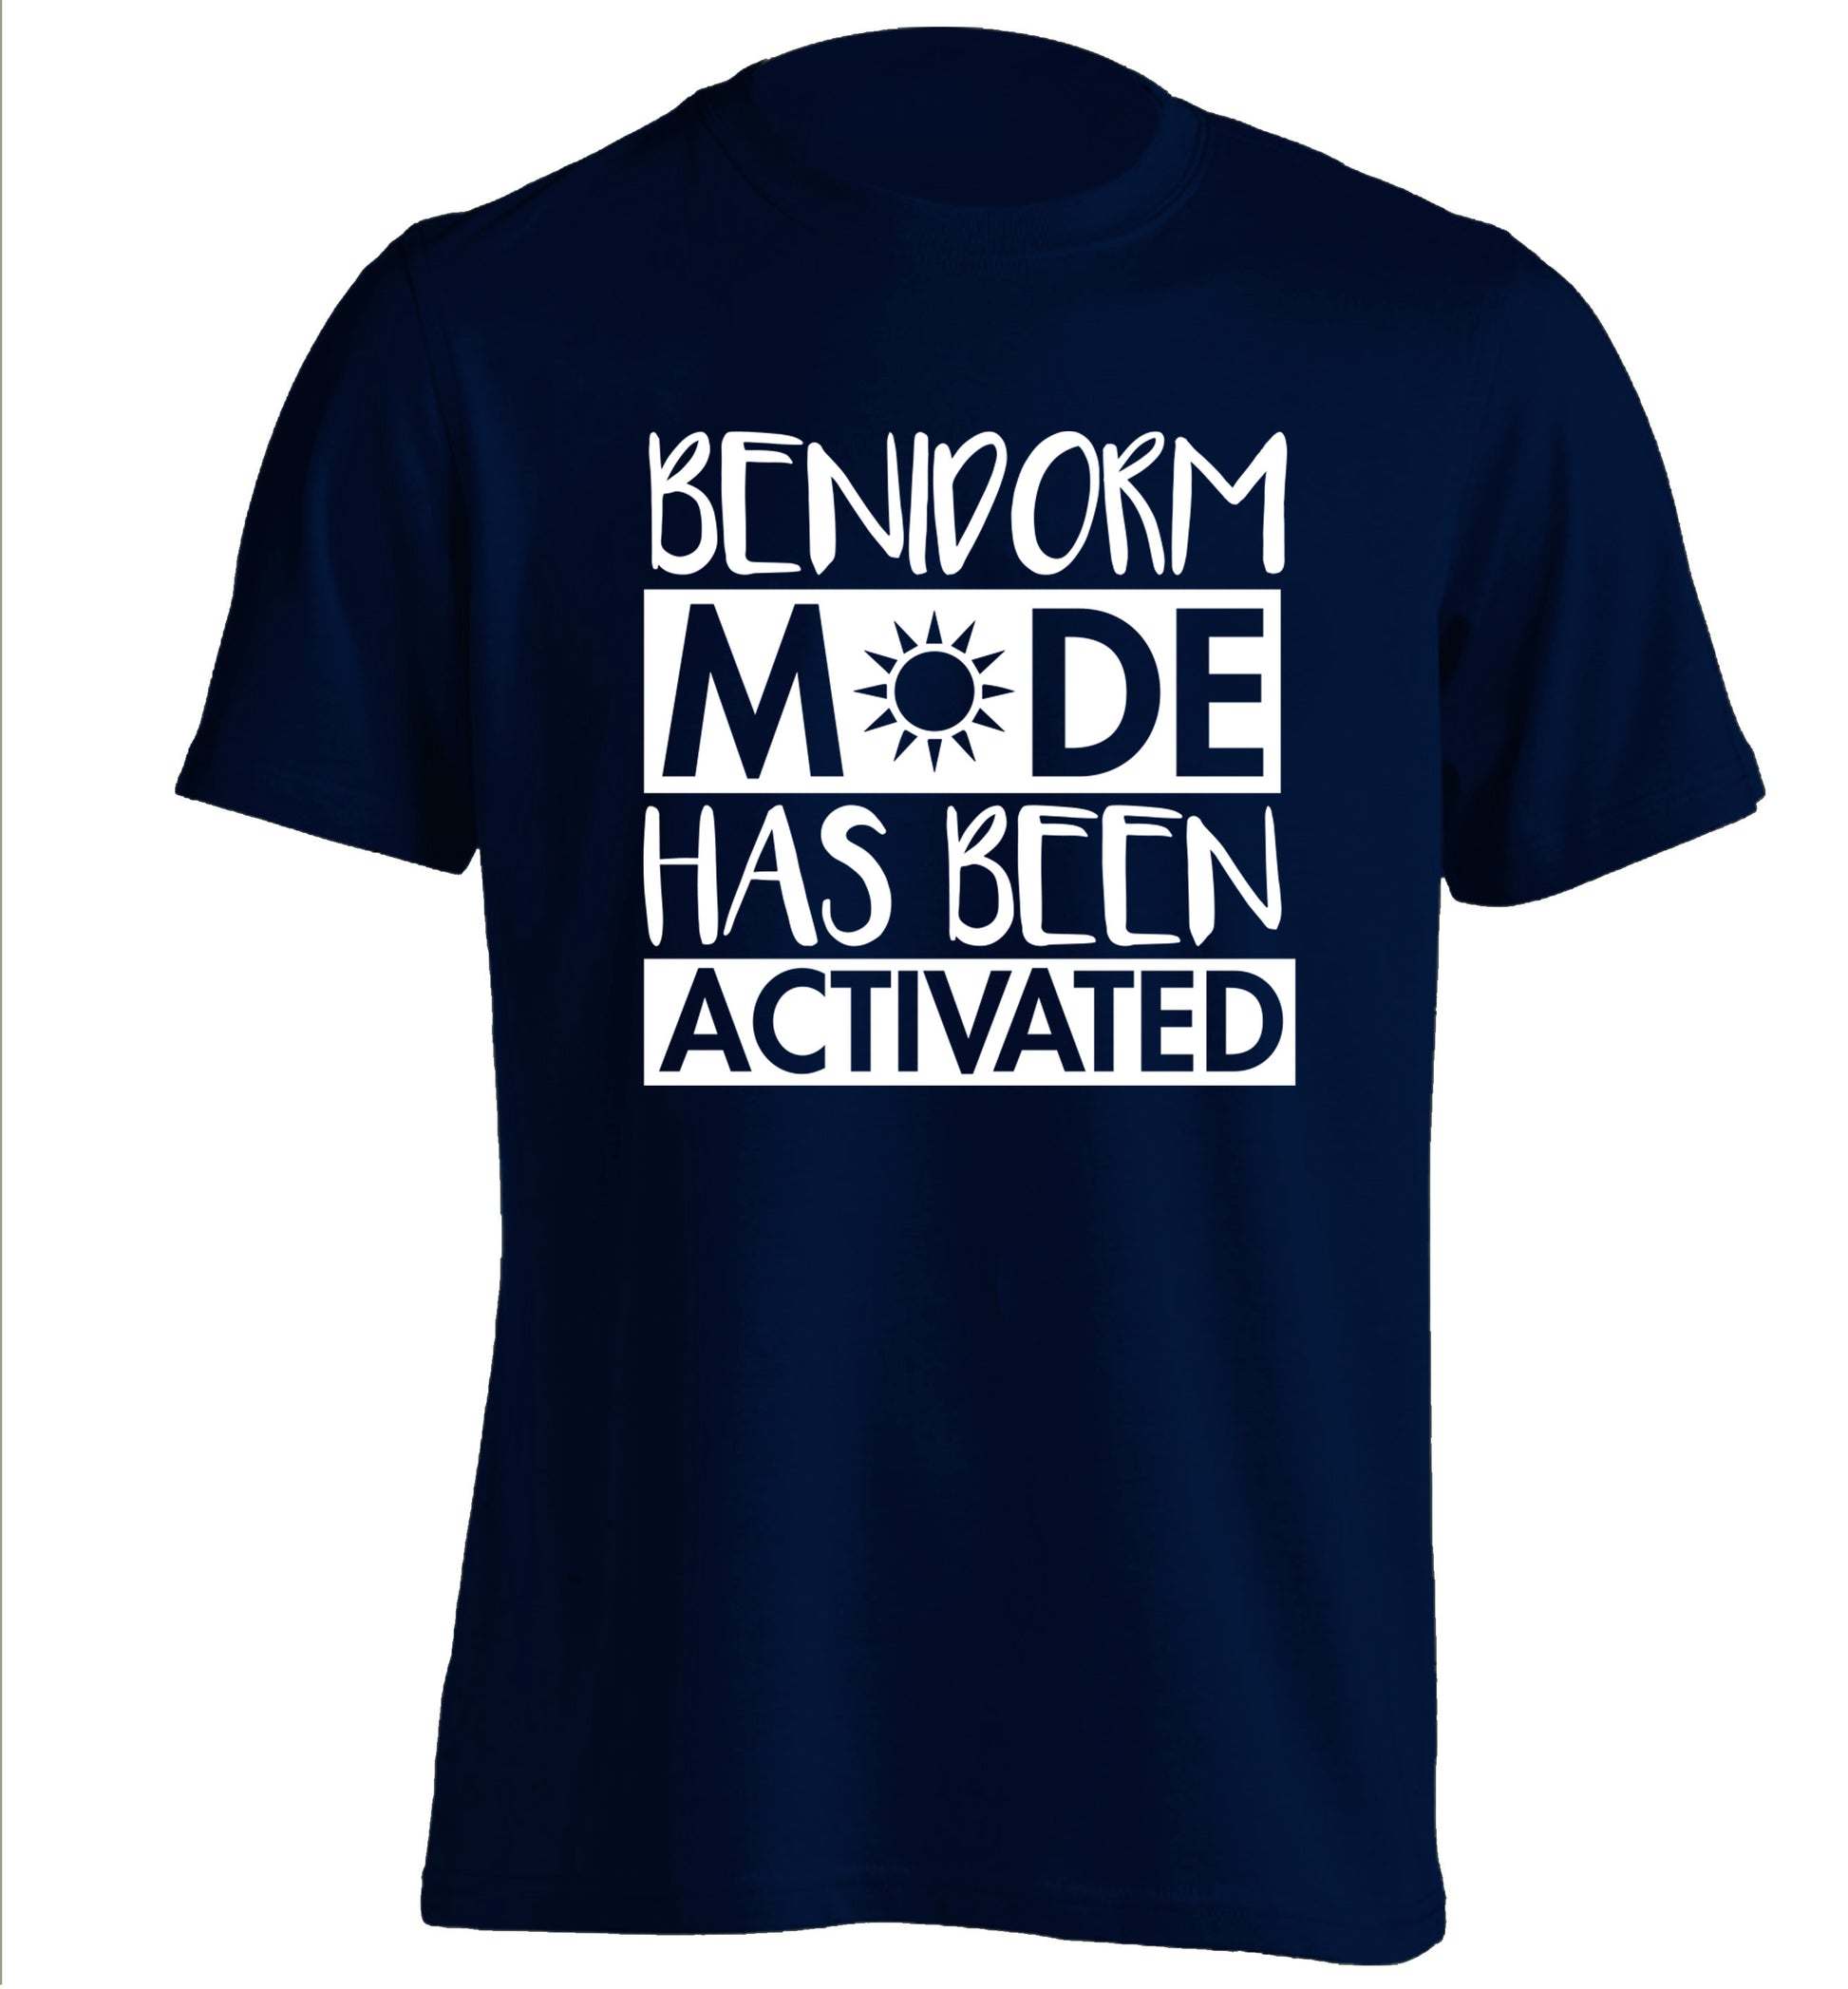 Benidorm mode has been activated adults unisex navy Tshirt 2XL